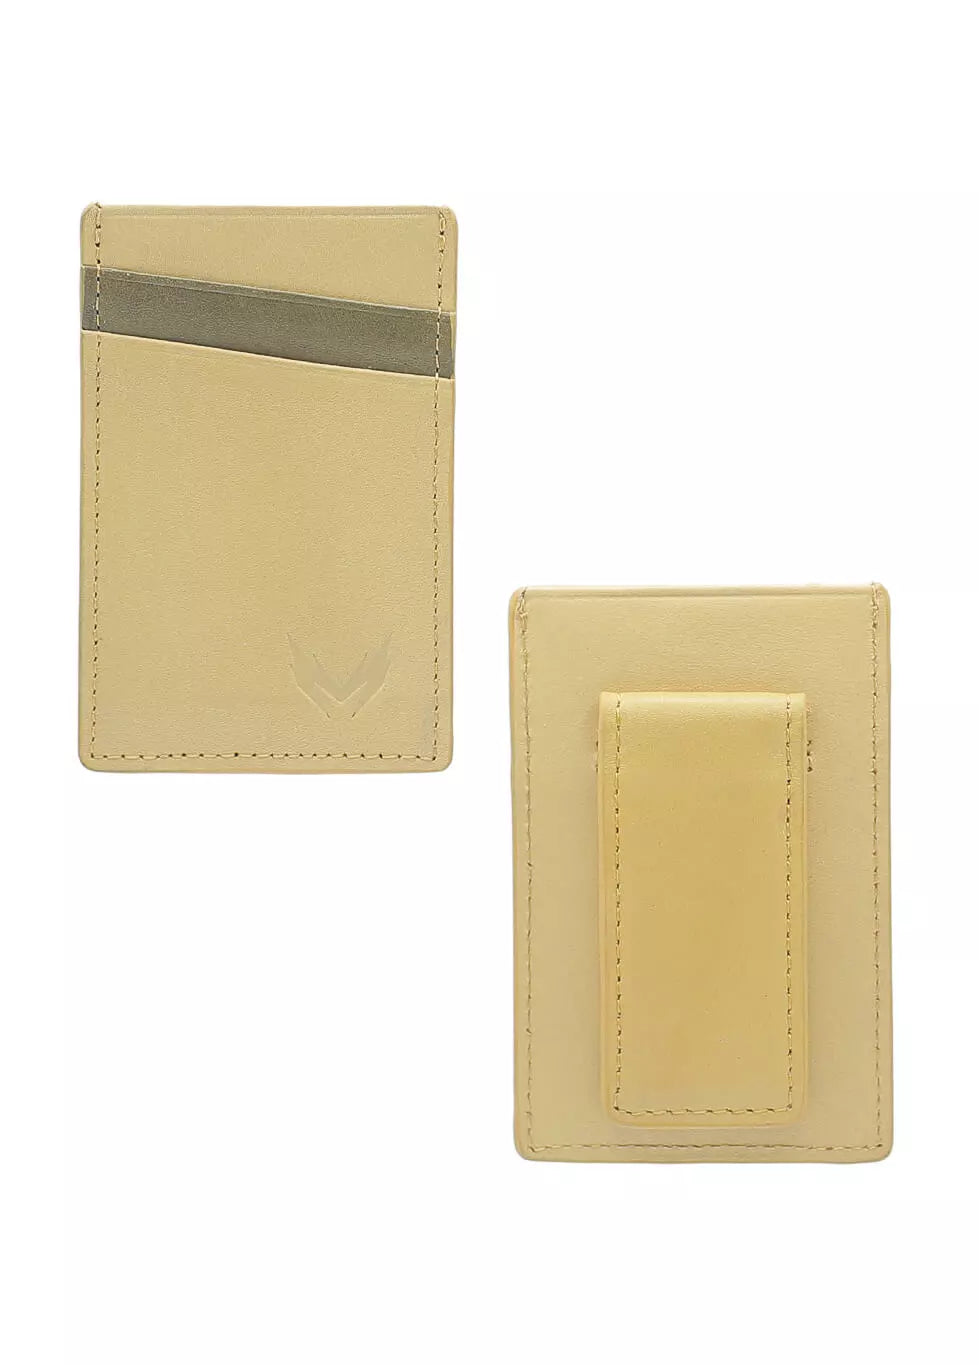 Desert Storm money clip card holder wallet